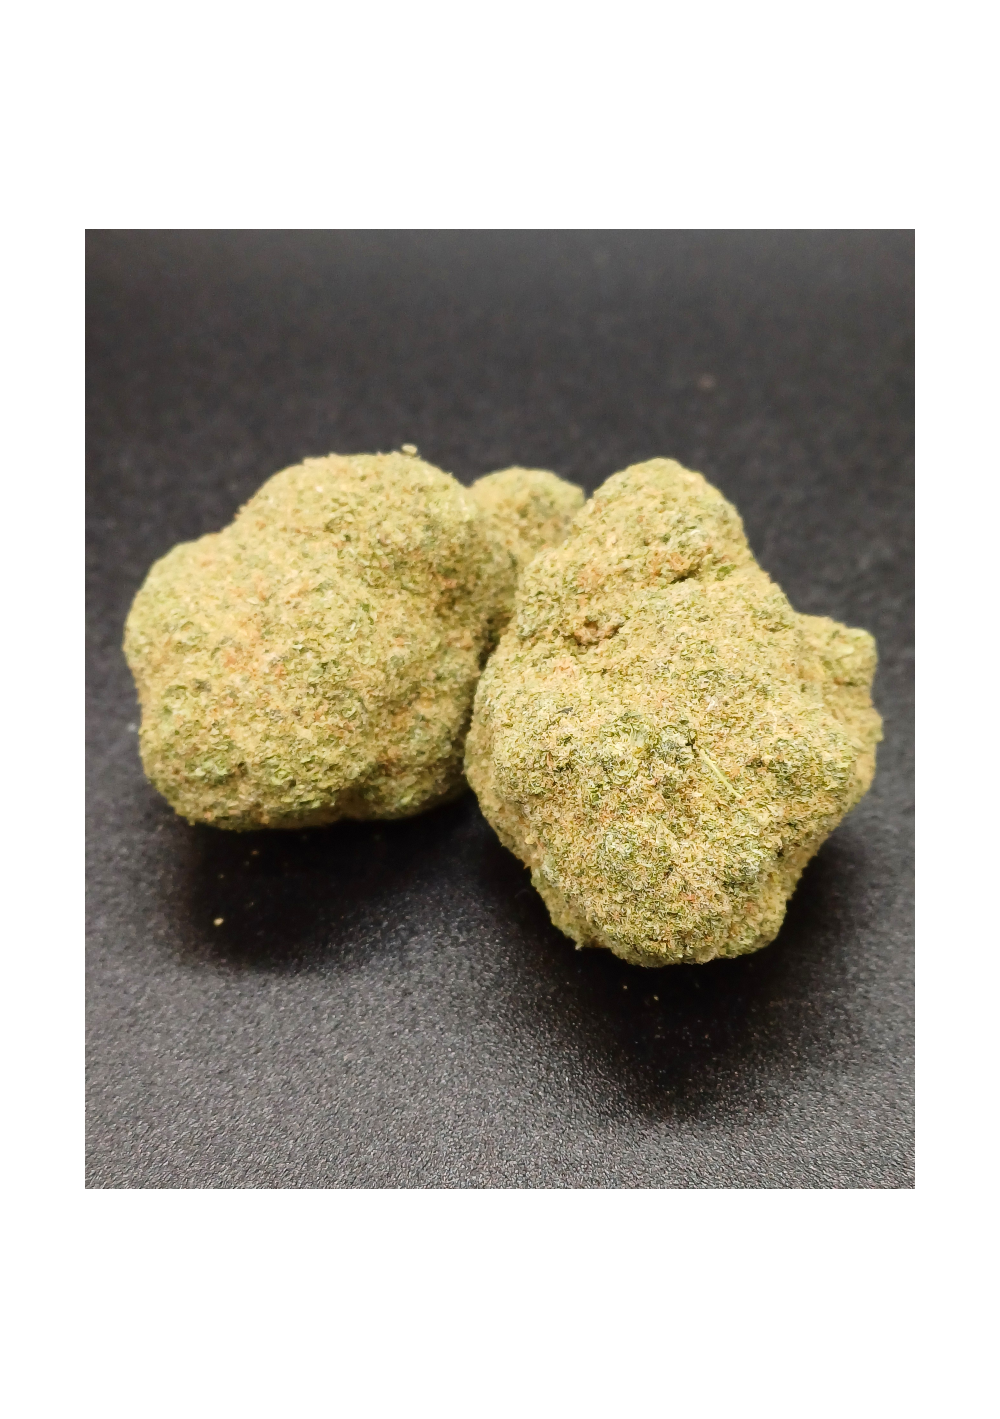 Candy Kush - Indoor Premium California, Cannabis Light